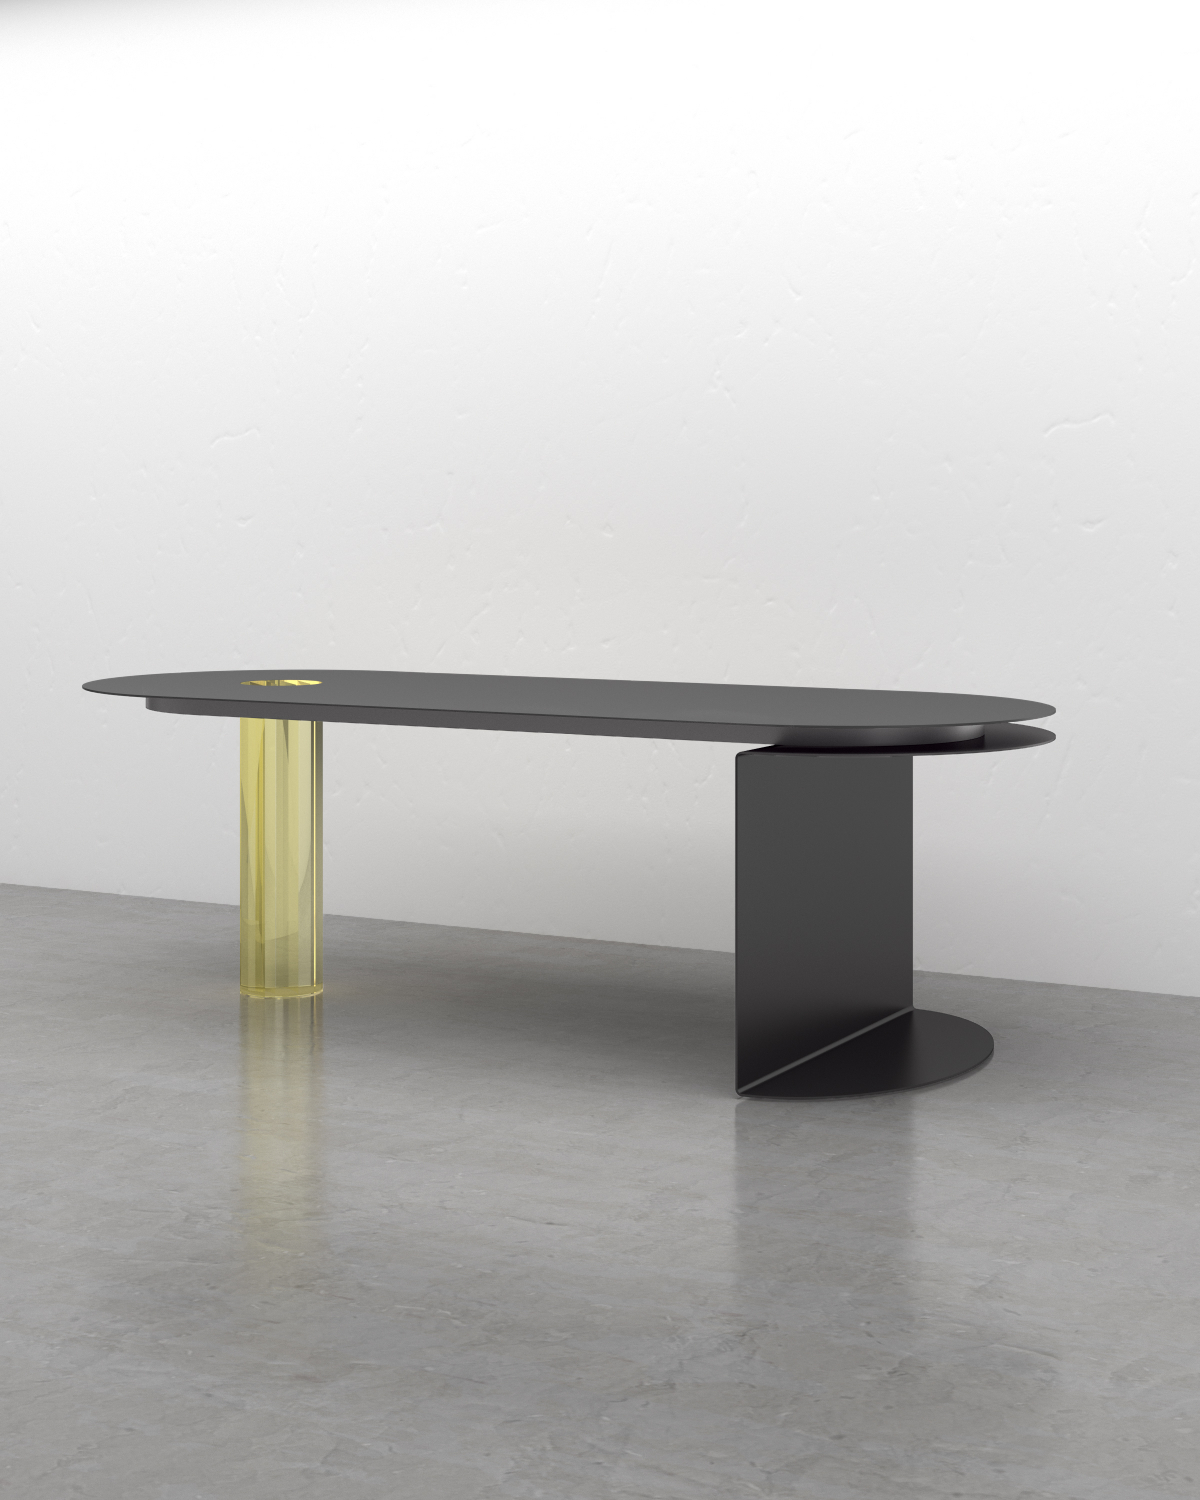 LANGE®TISCH - Product Design - Aluminium Table - Contemporary Object - Hamburg Design